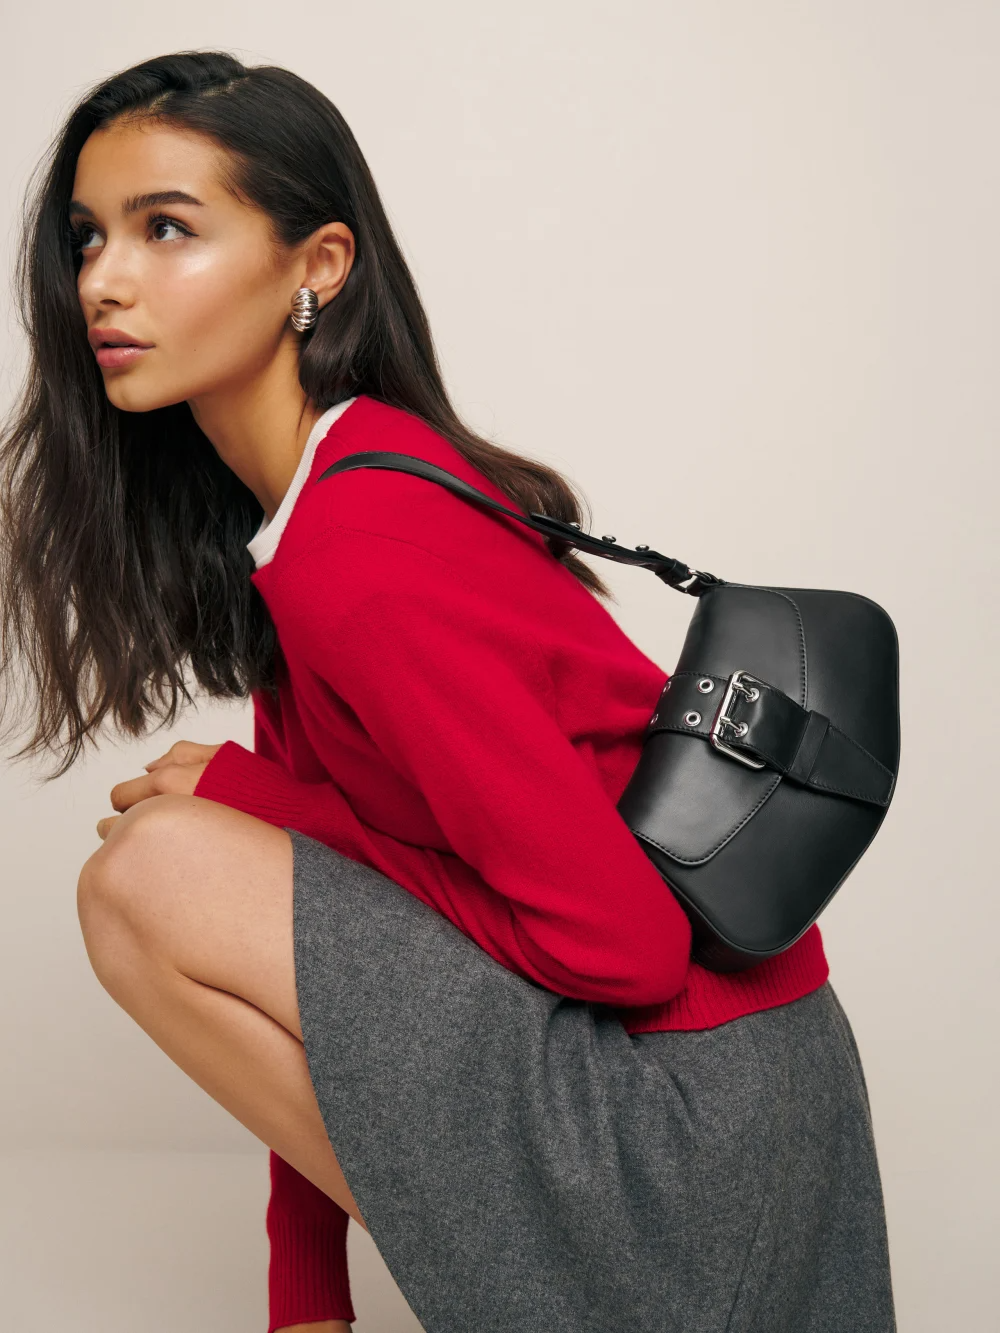 Lulu by Lulu Guinness Black Shoulder Bag Purse | Black shoulder bag, Purses  and bags, Shoulder bag